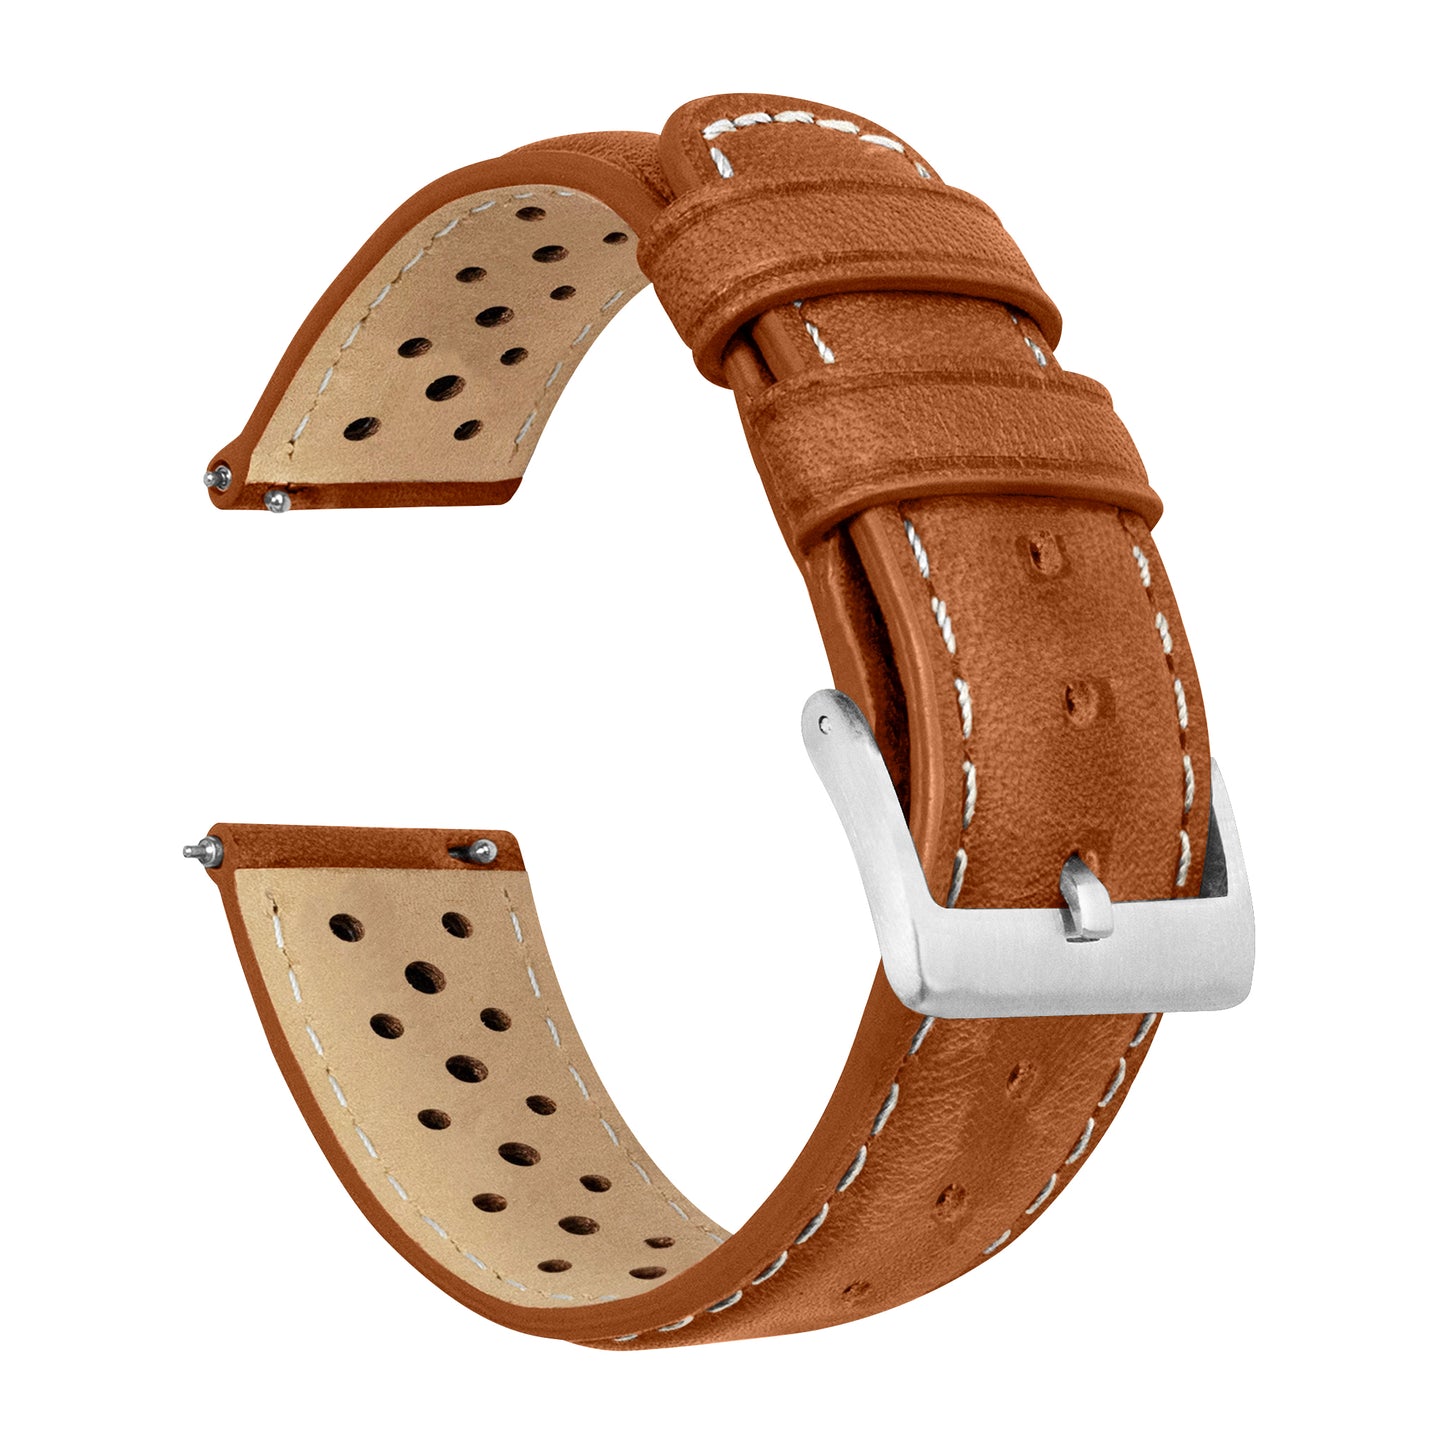 Samsung Galaxy Watch3 Racing Horween Leather Caramel Brown Linen Stitch Watch Band